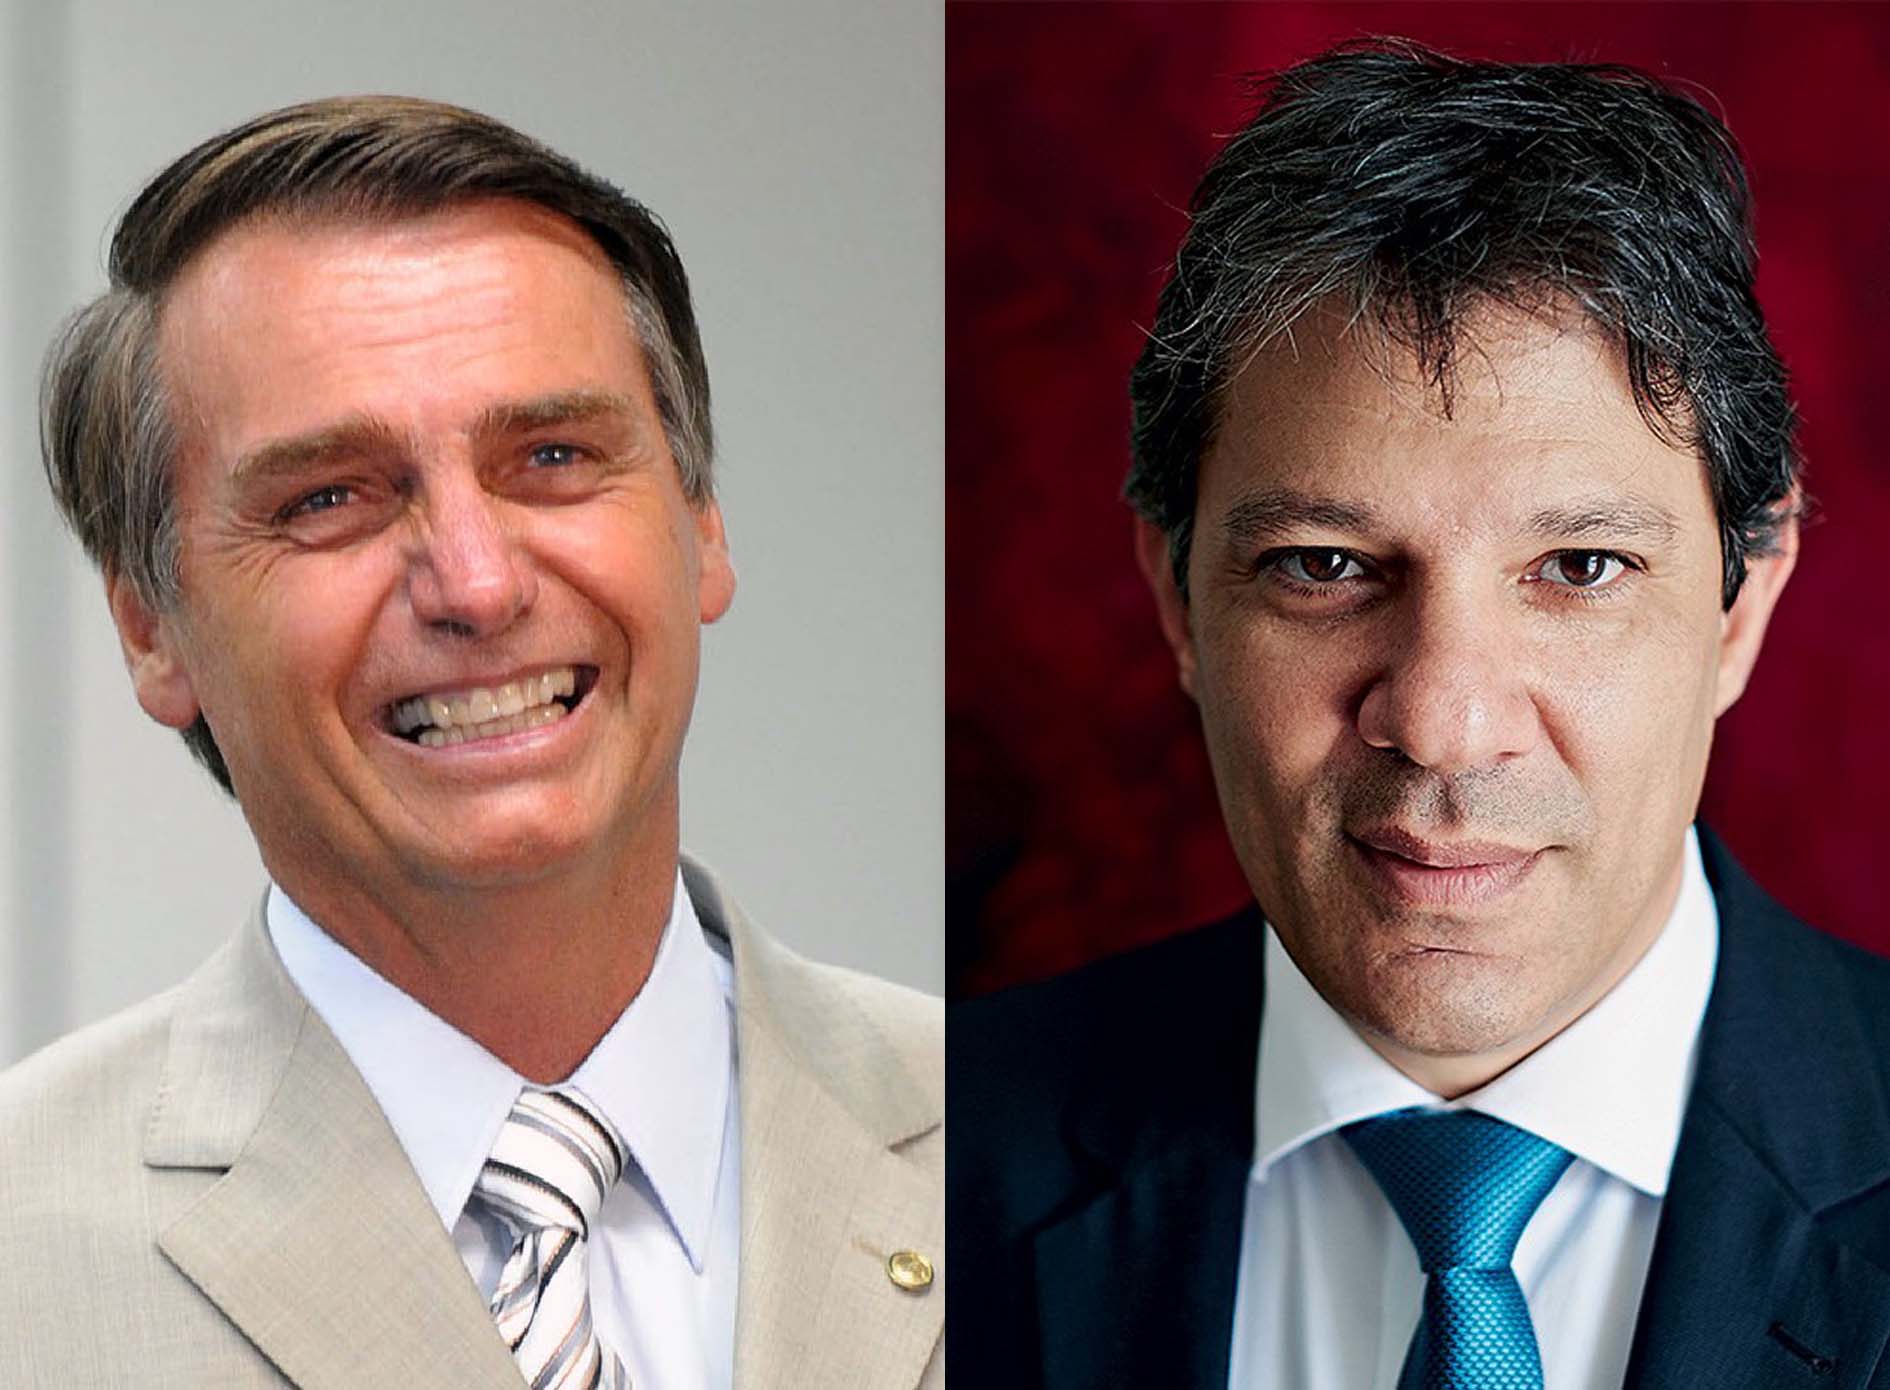 No Amapá, Bolsonaro tem 47,8% e Haddad 37,7%, aponta pesquisa